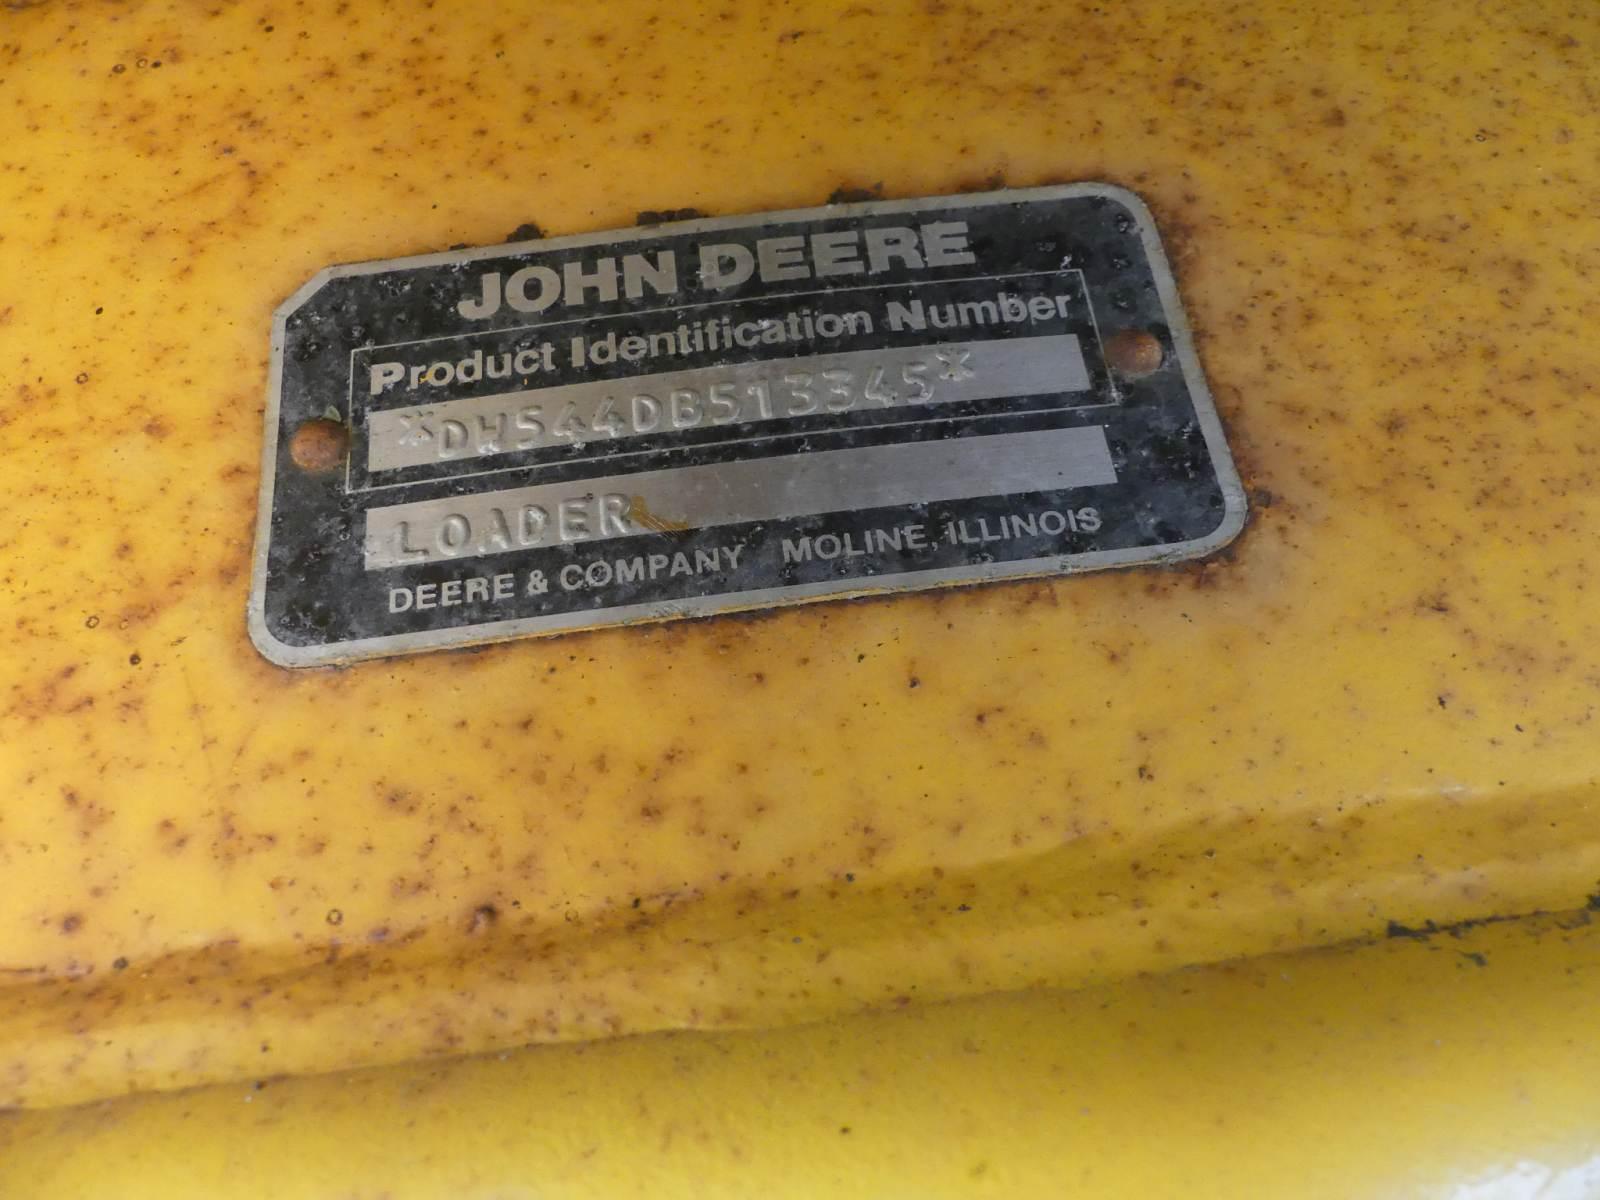 John Deere 544D Rubber-tired Loader, s/n DW544DB513545: Canopy, Meter Shows